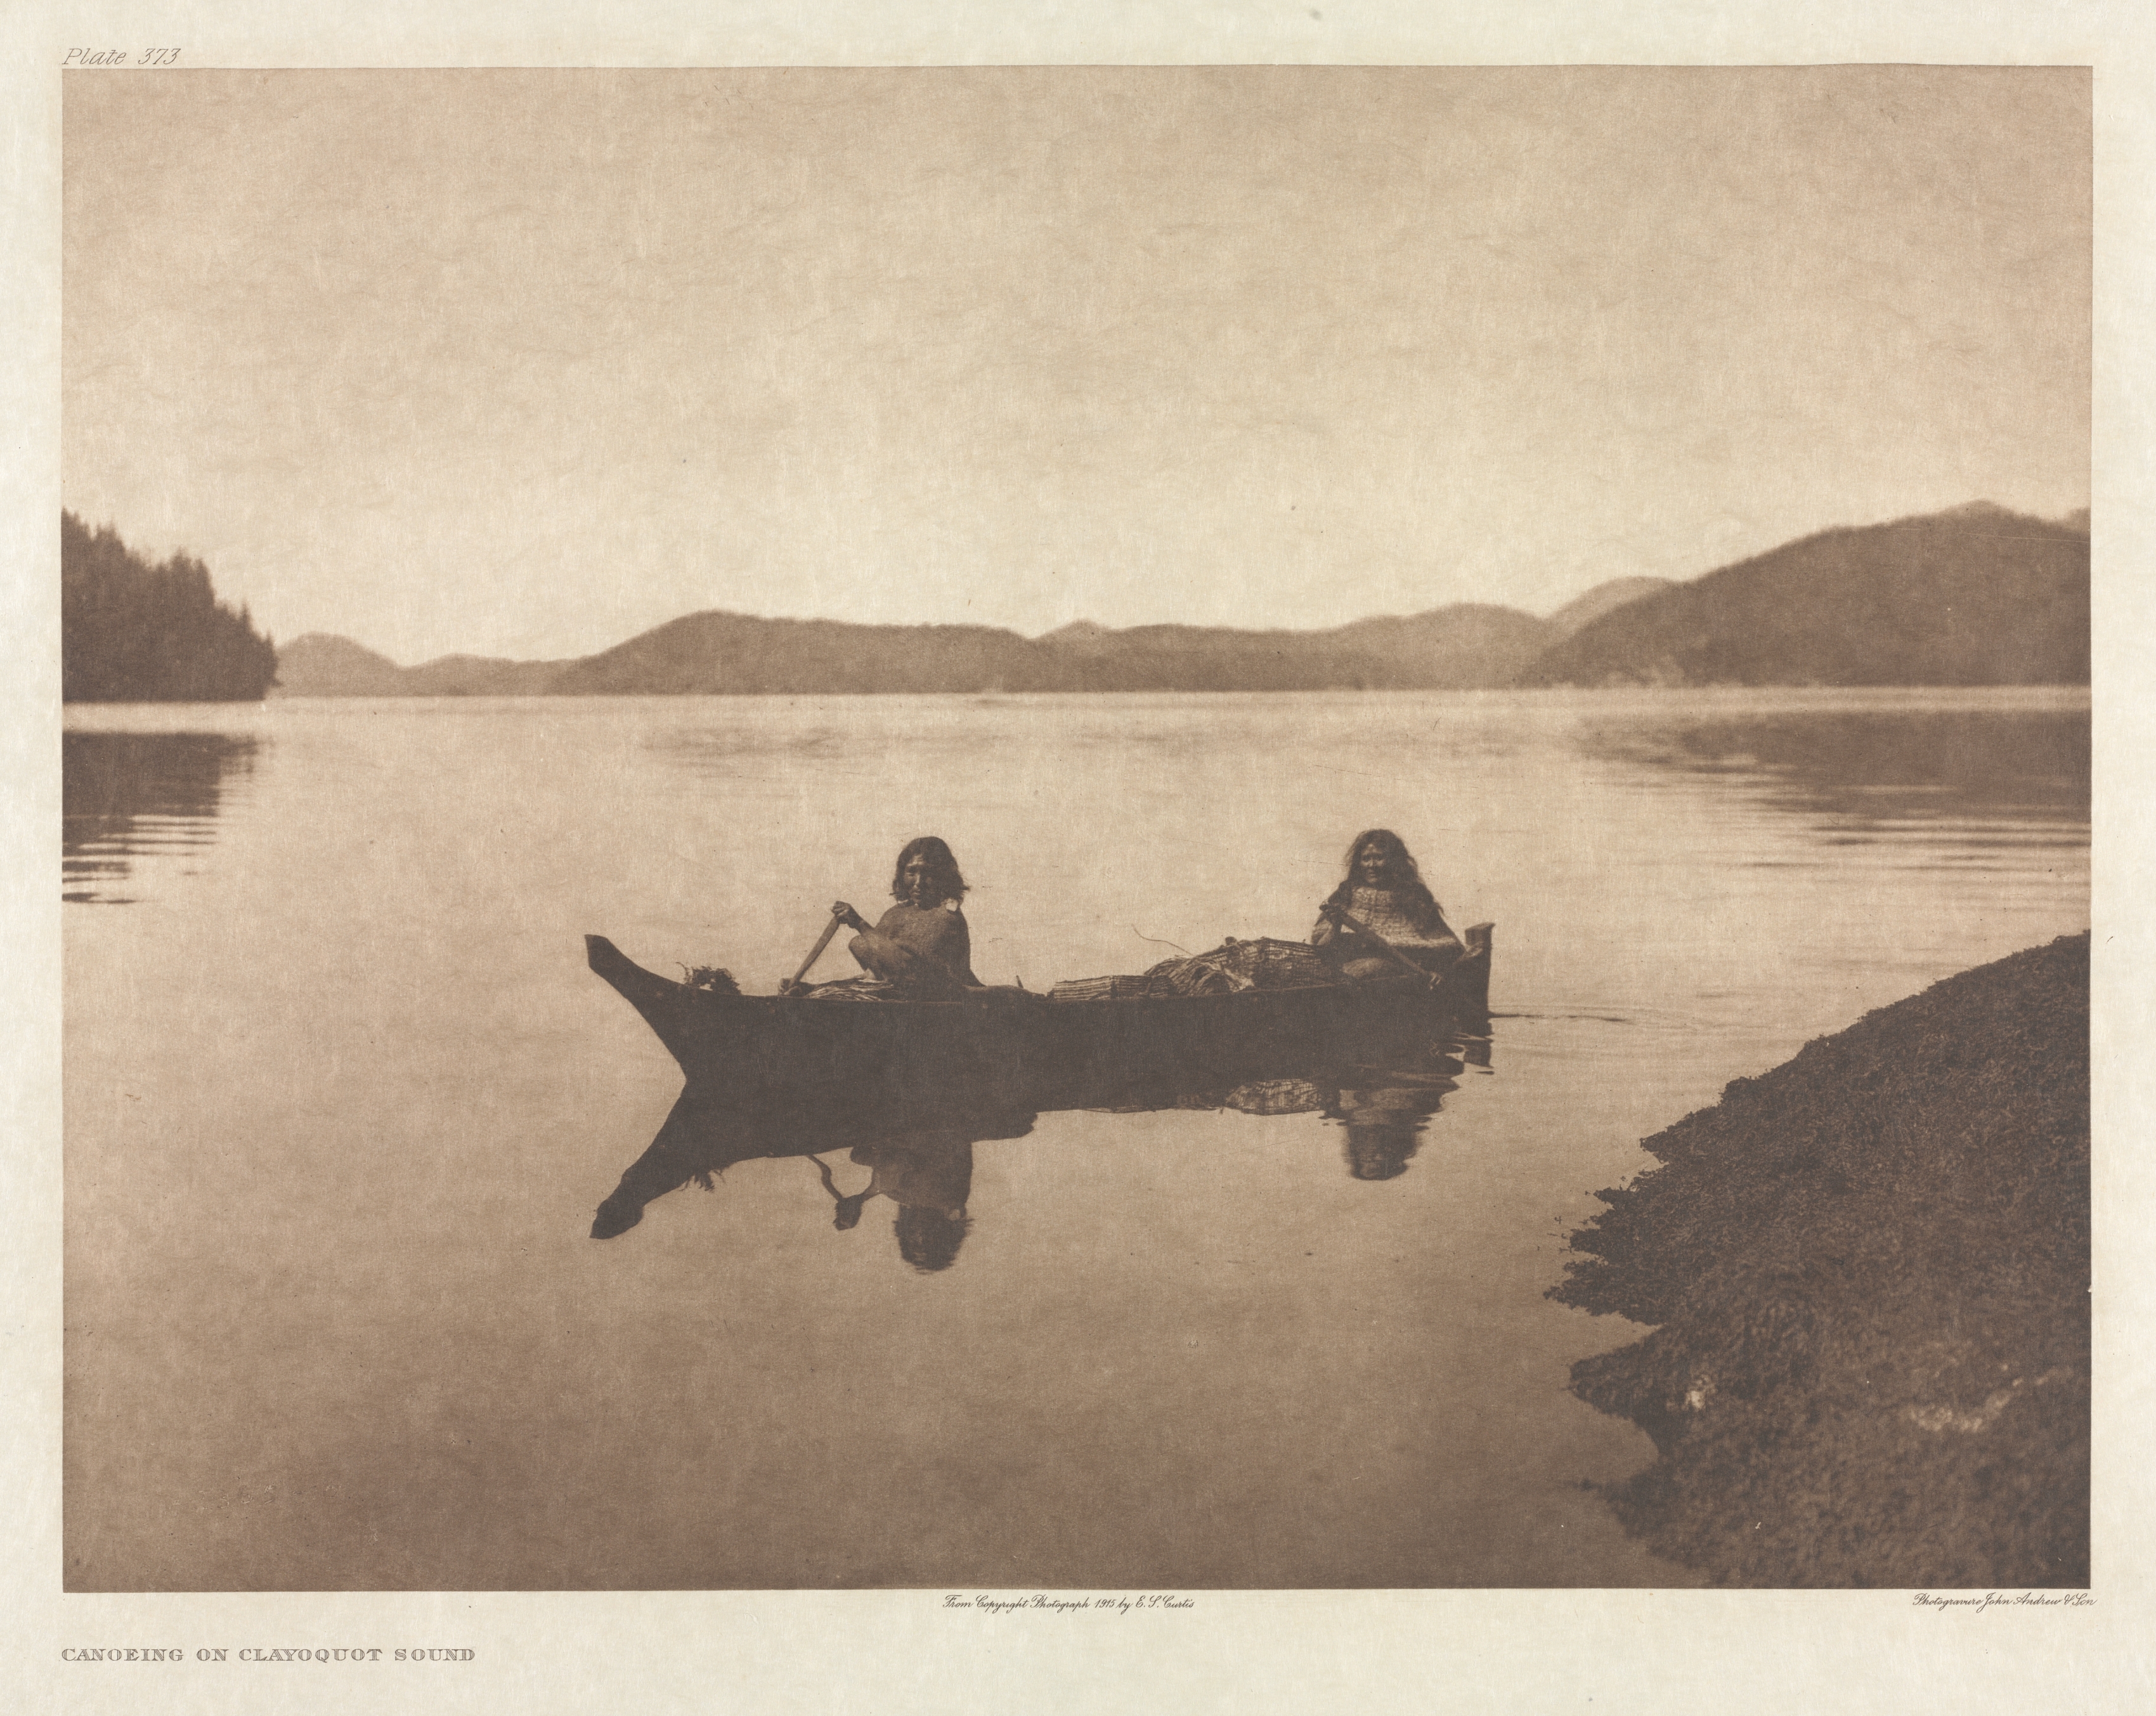 Portfolio XI, Plate 373: Canoeing on Clayoquot Sound